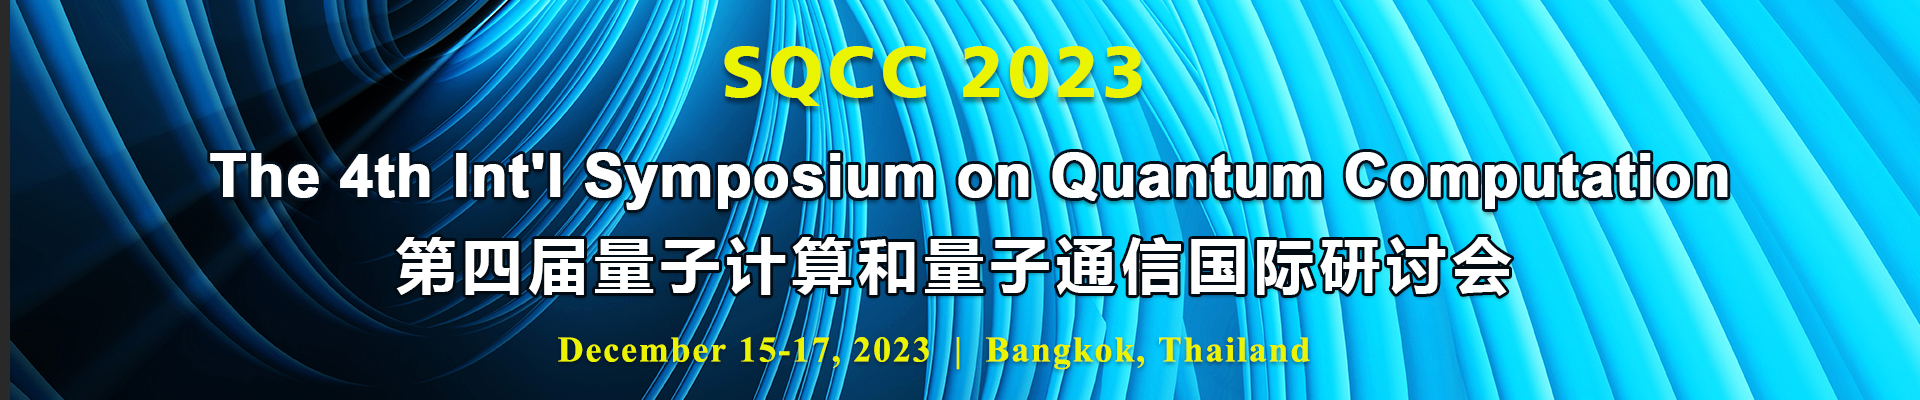 The 4th Int'l Symposium on Quantum Computation and Communication (SQCC 2023), Bangkok, Thailand,Bangkok,Thailand